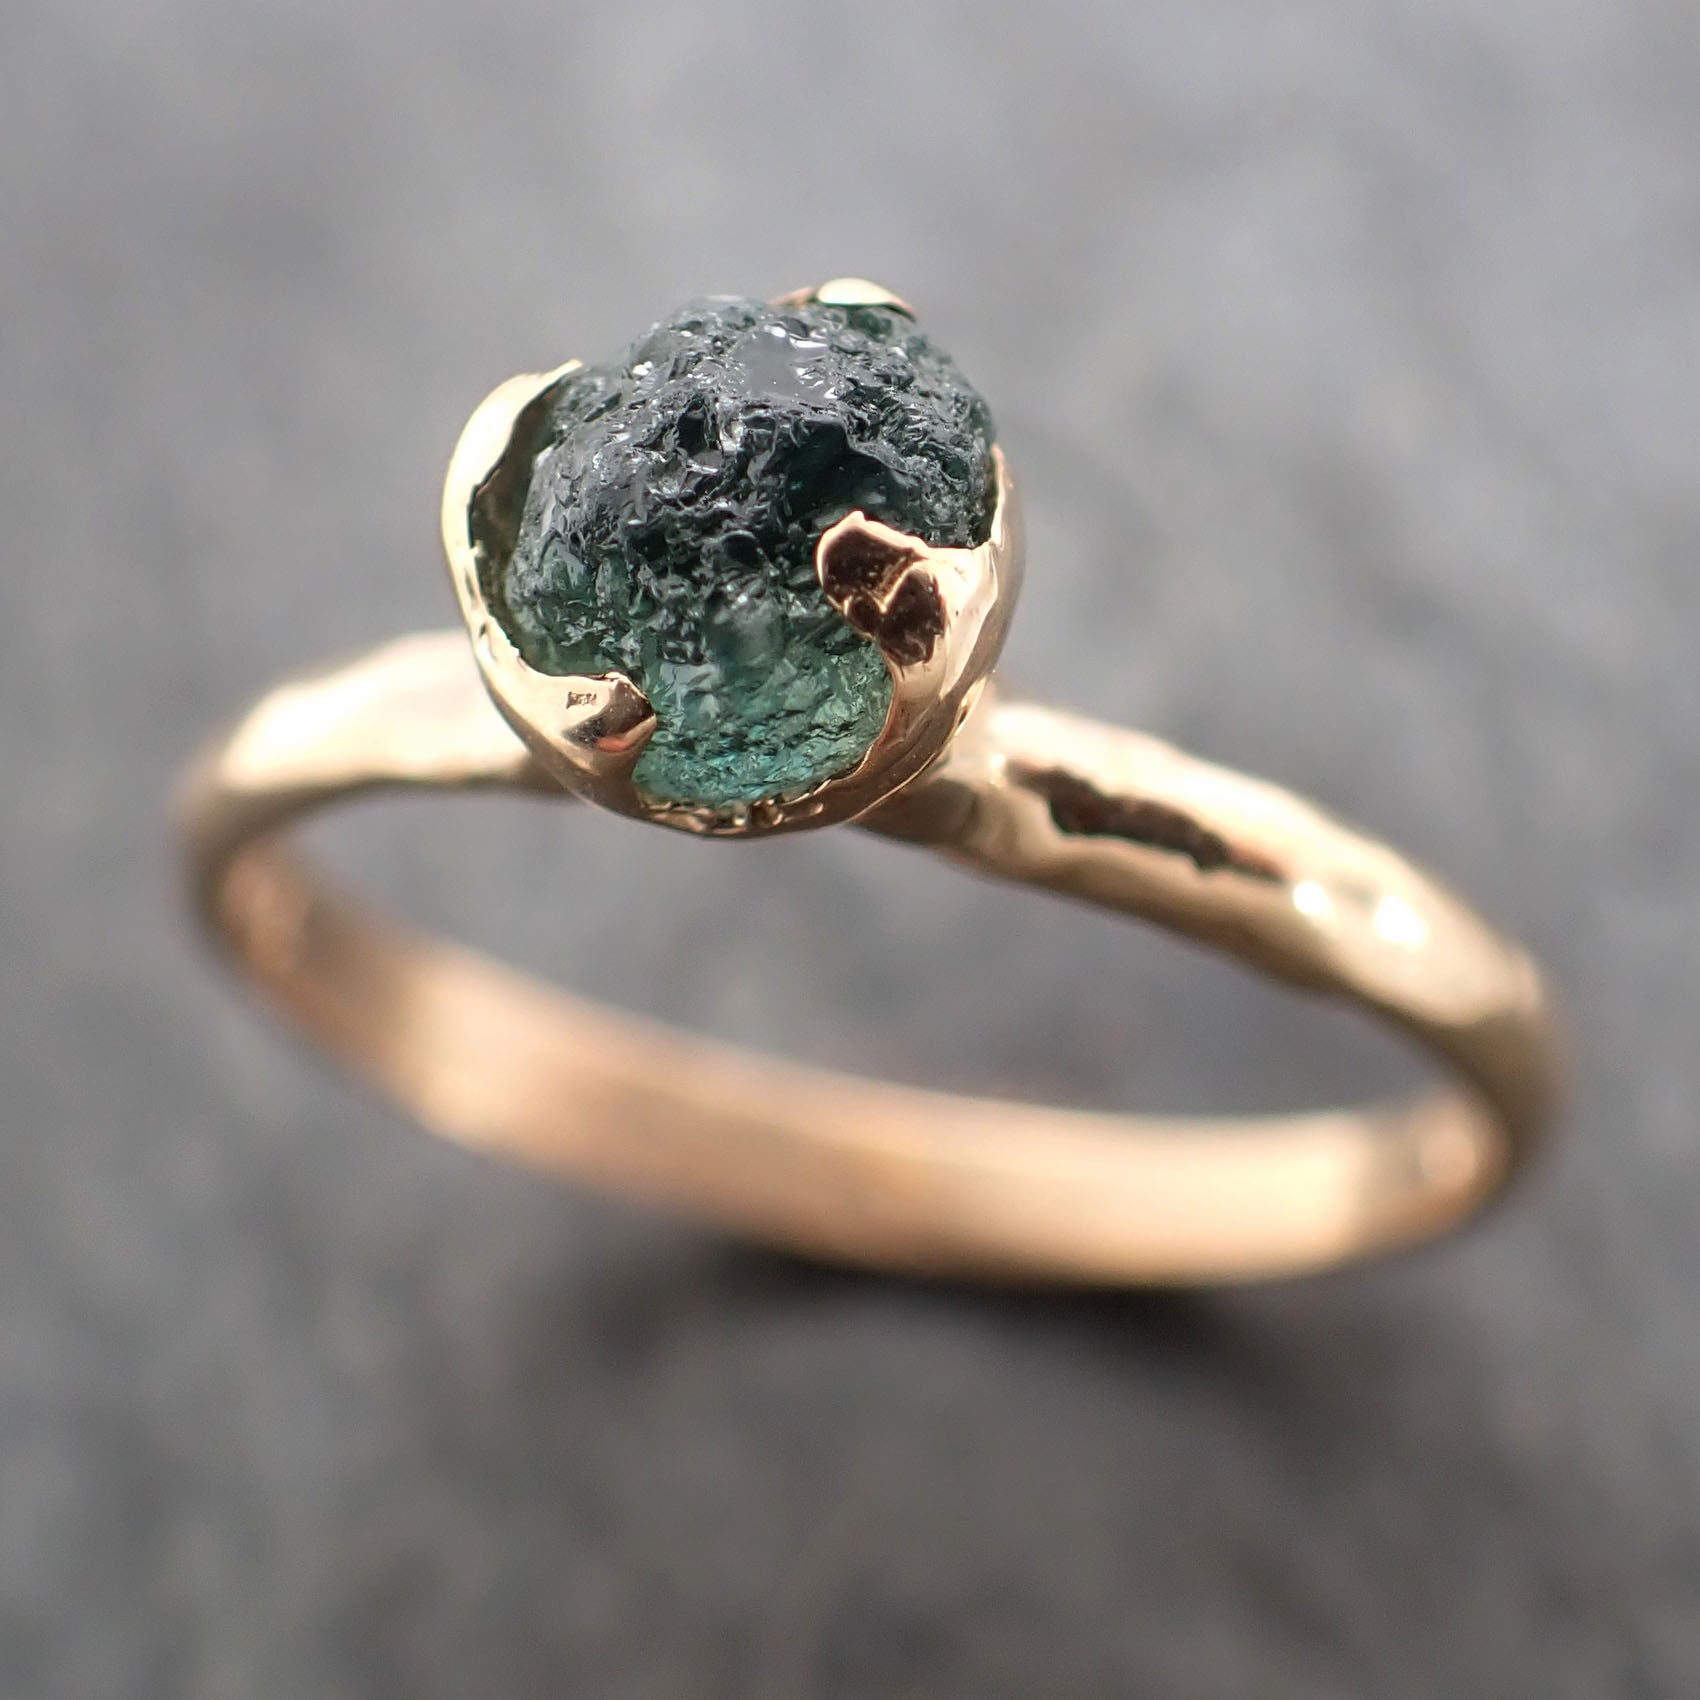 raw green montana sapphire 14k yellow gold engagement ring wedding ring custom gemstone ring solitaire ring byangeline 2369 Alternative Engagement